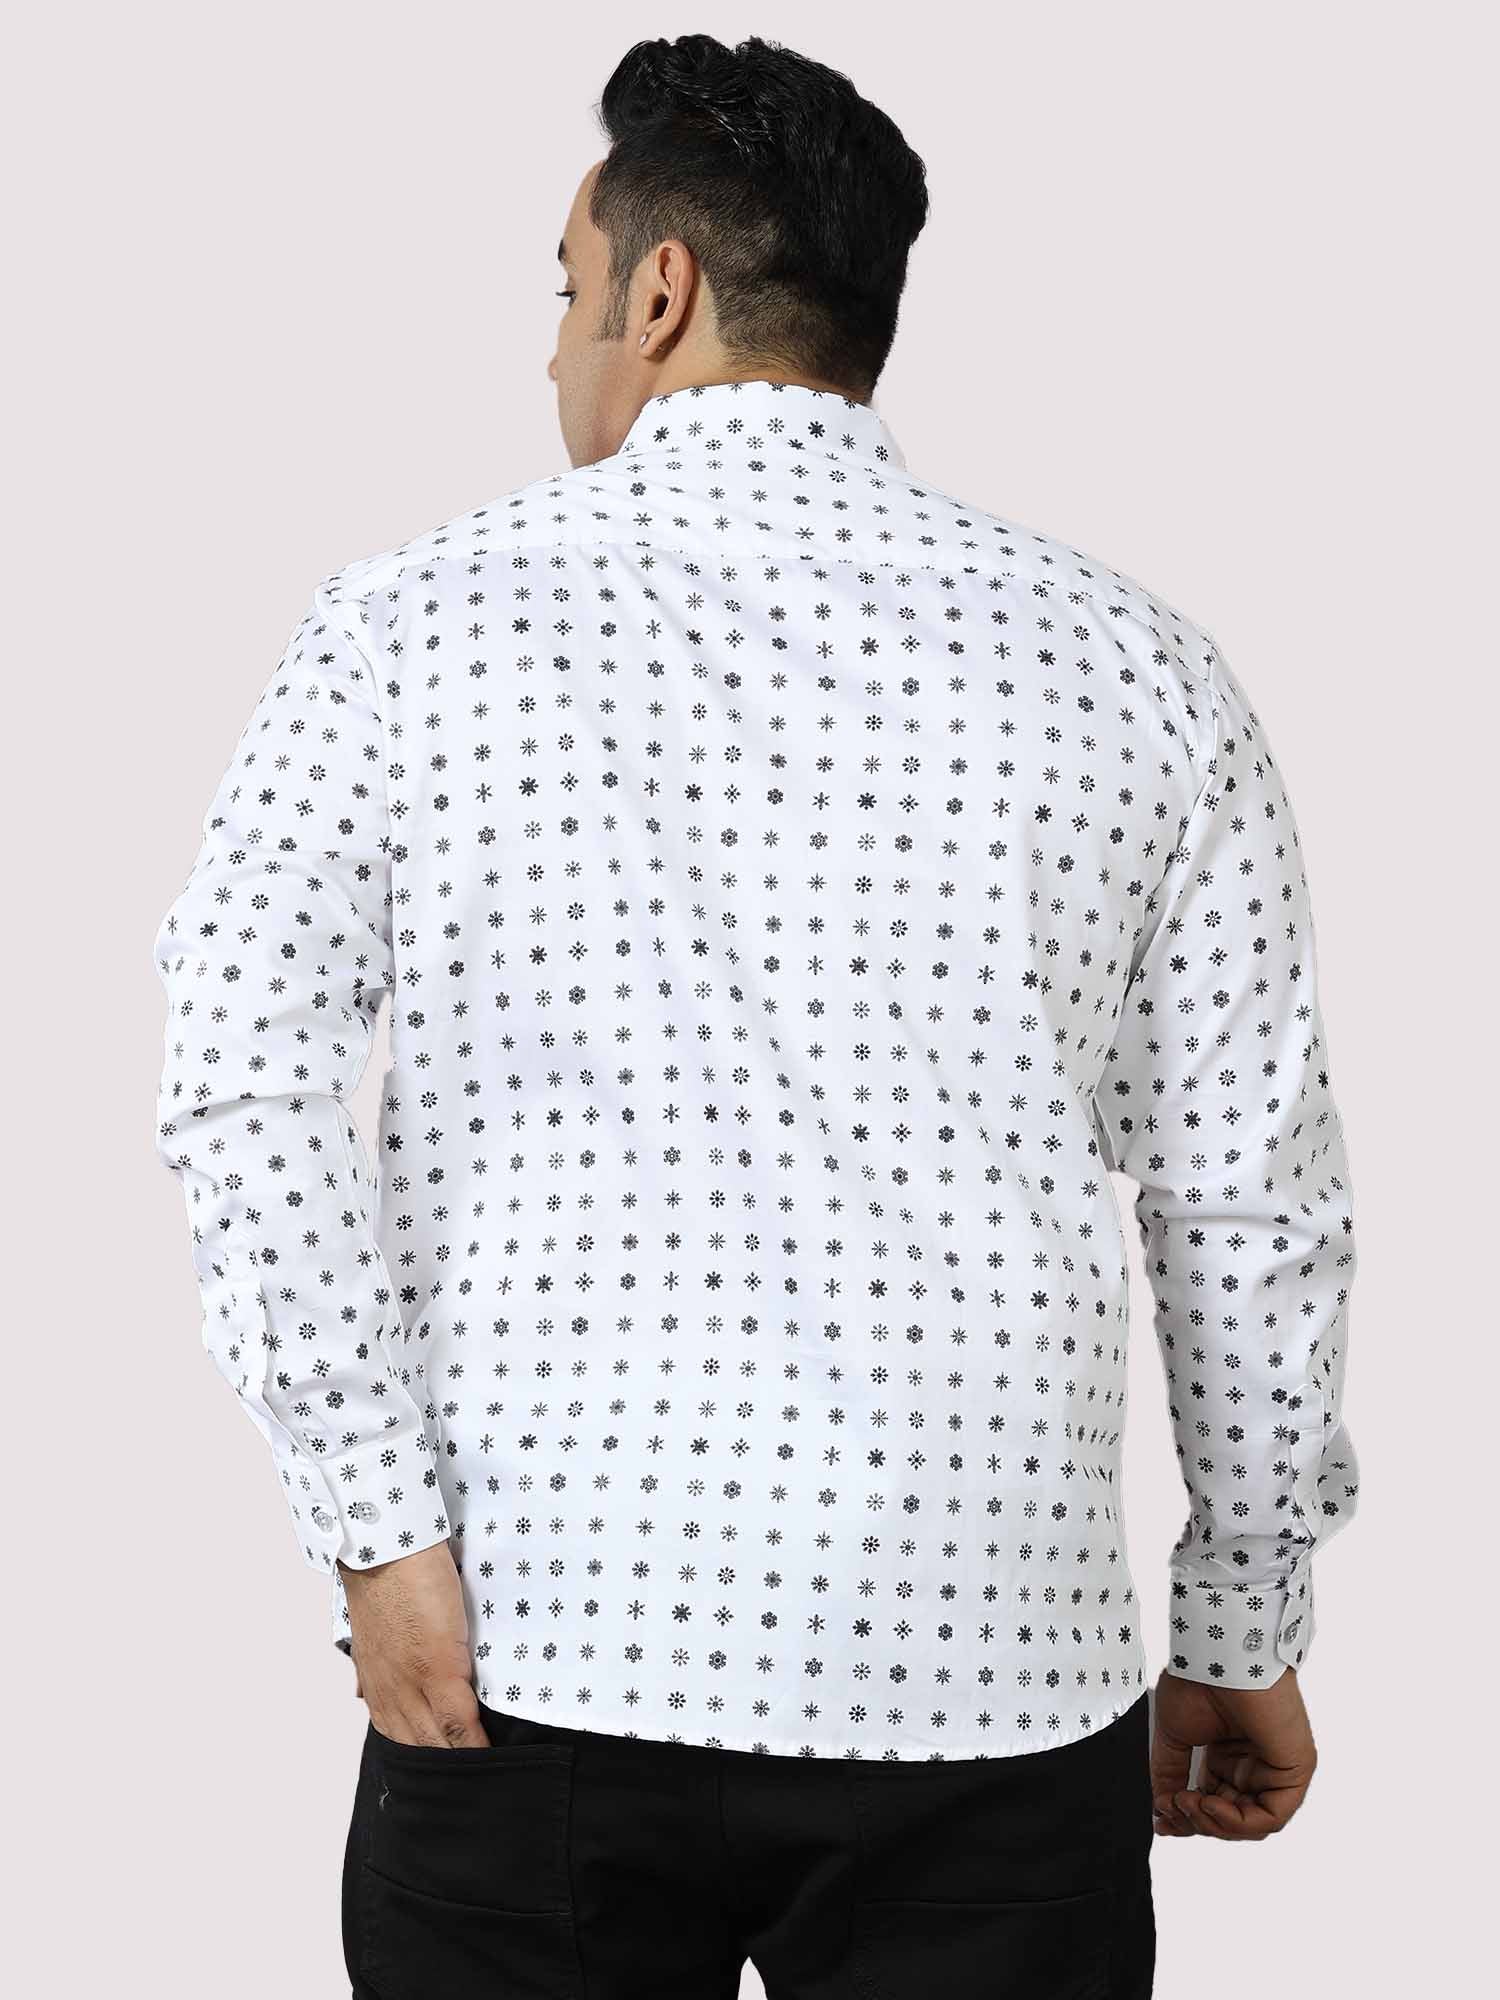 Twinkle Stars Printed Cotton Full Shirt Men's Plus Size